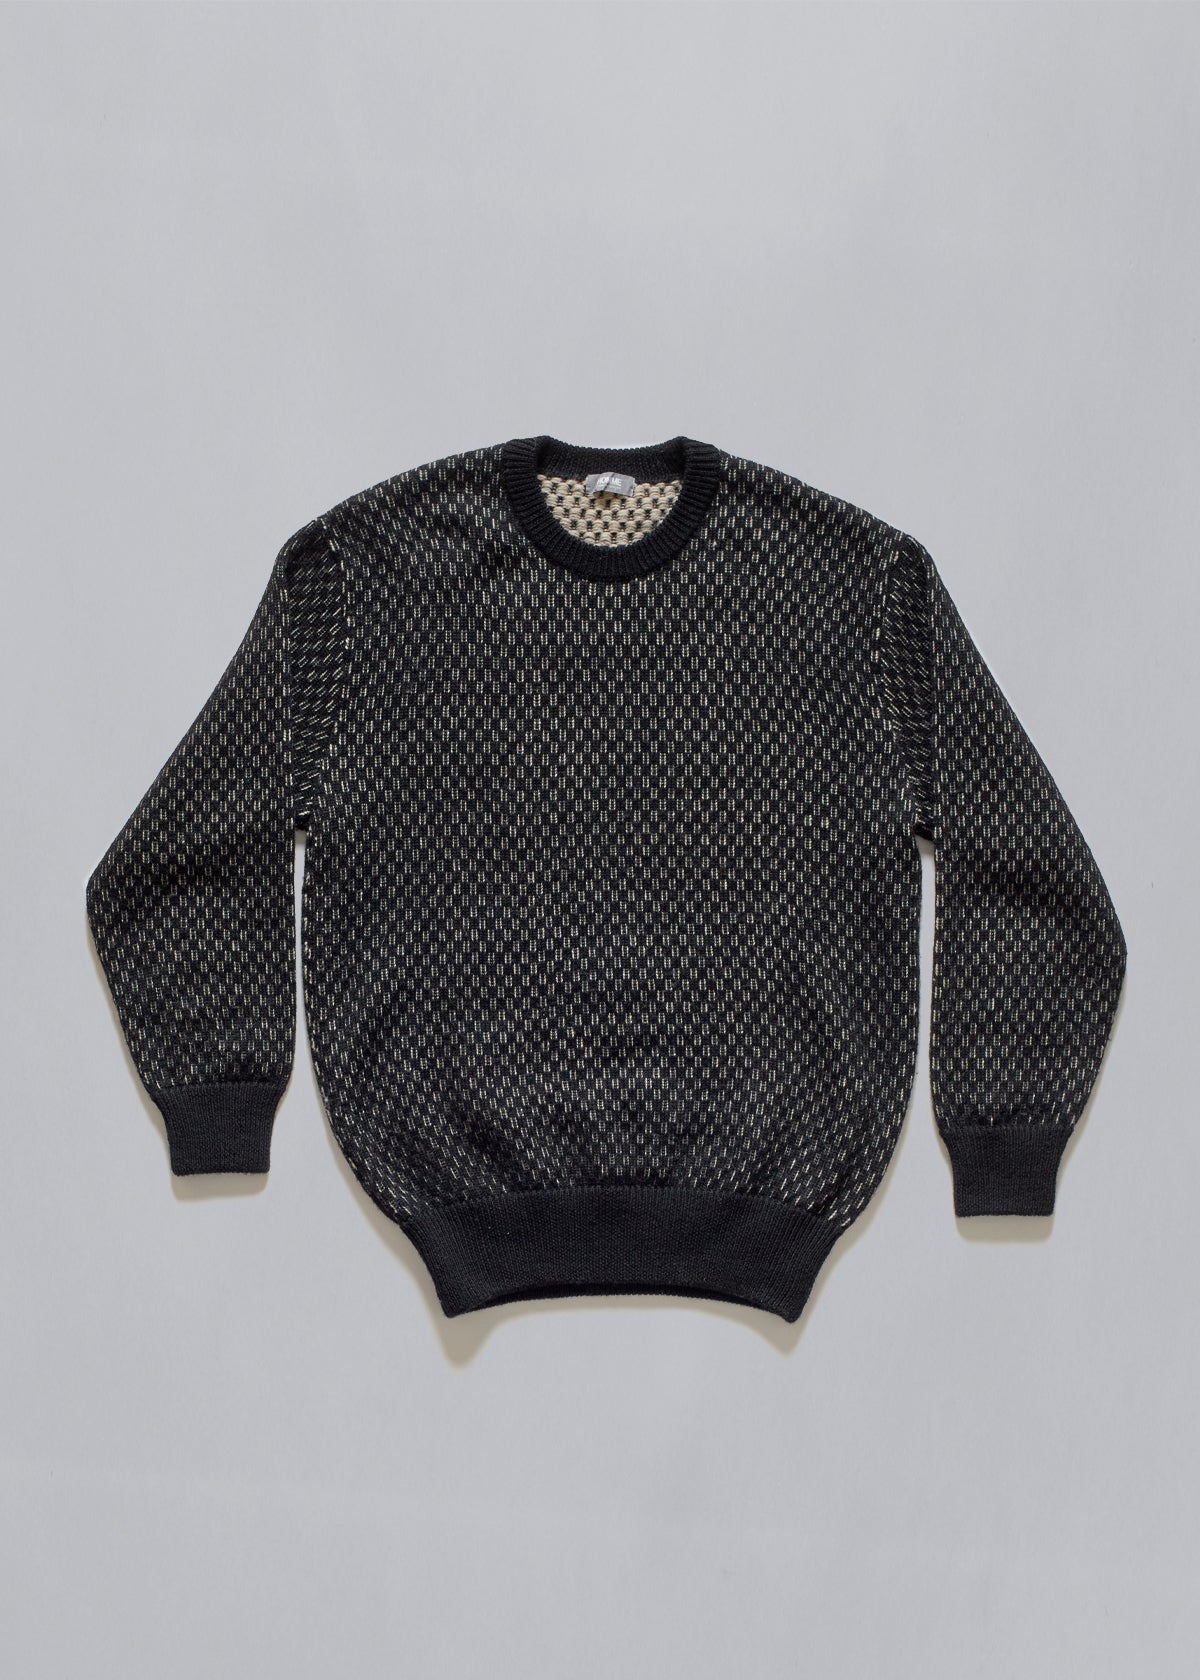 Homme Norwegian Knit 1980's - Medium - The Archivist Store